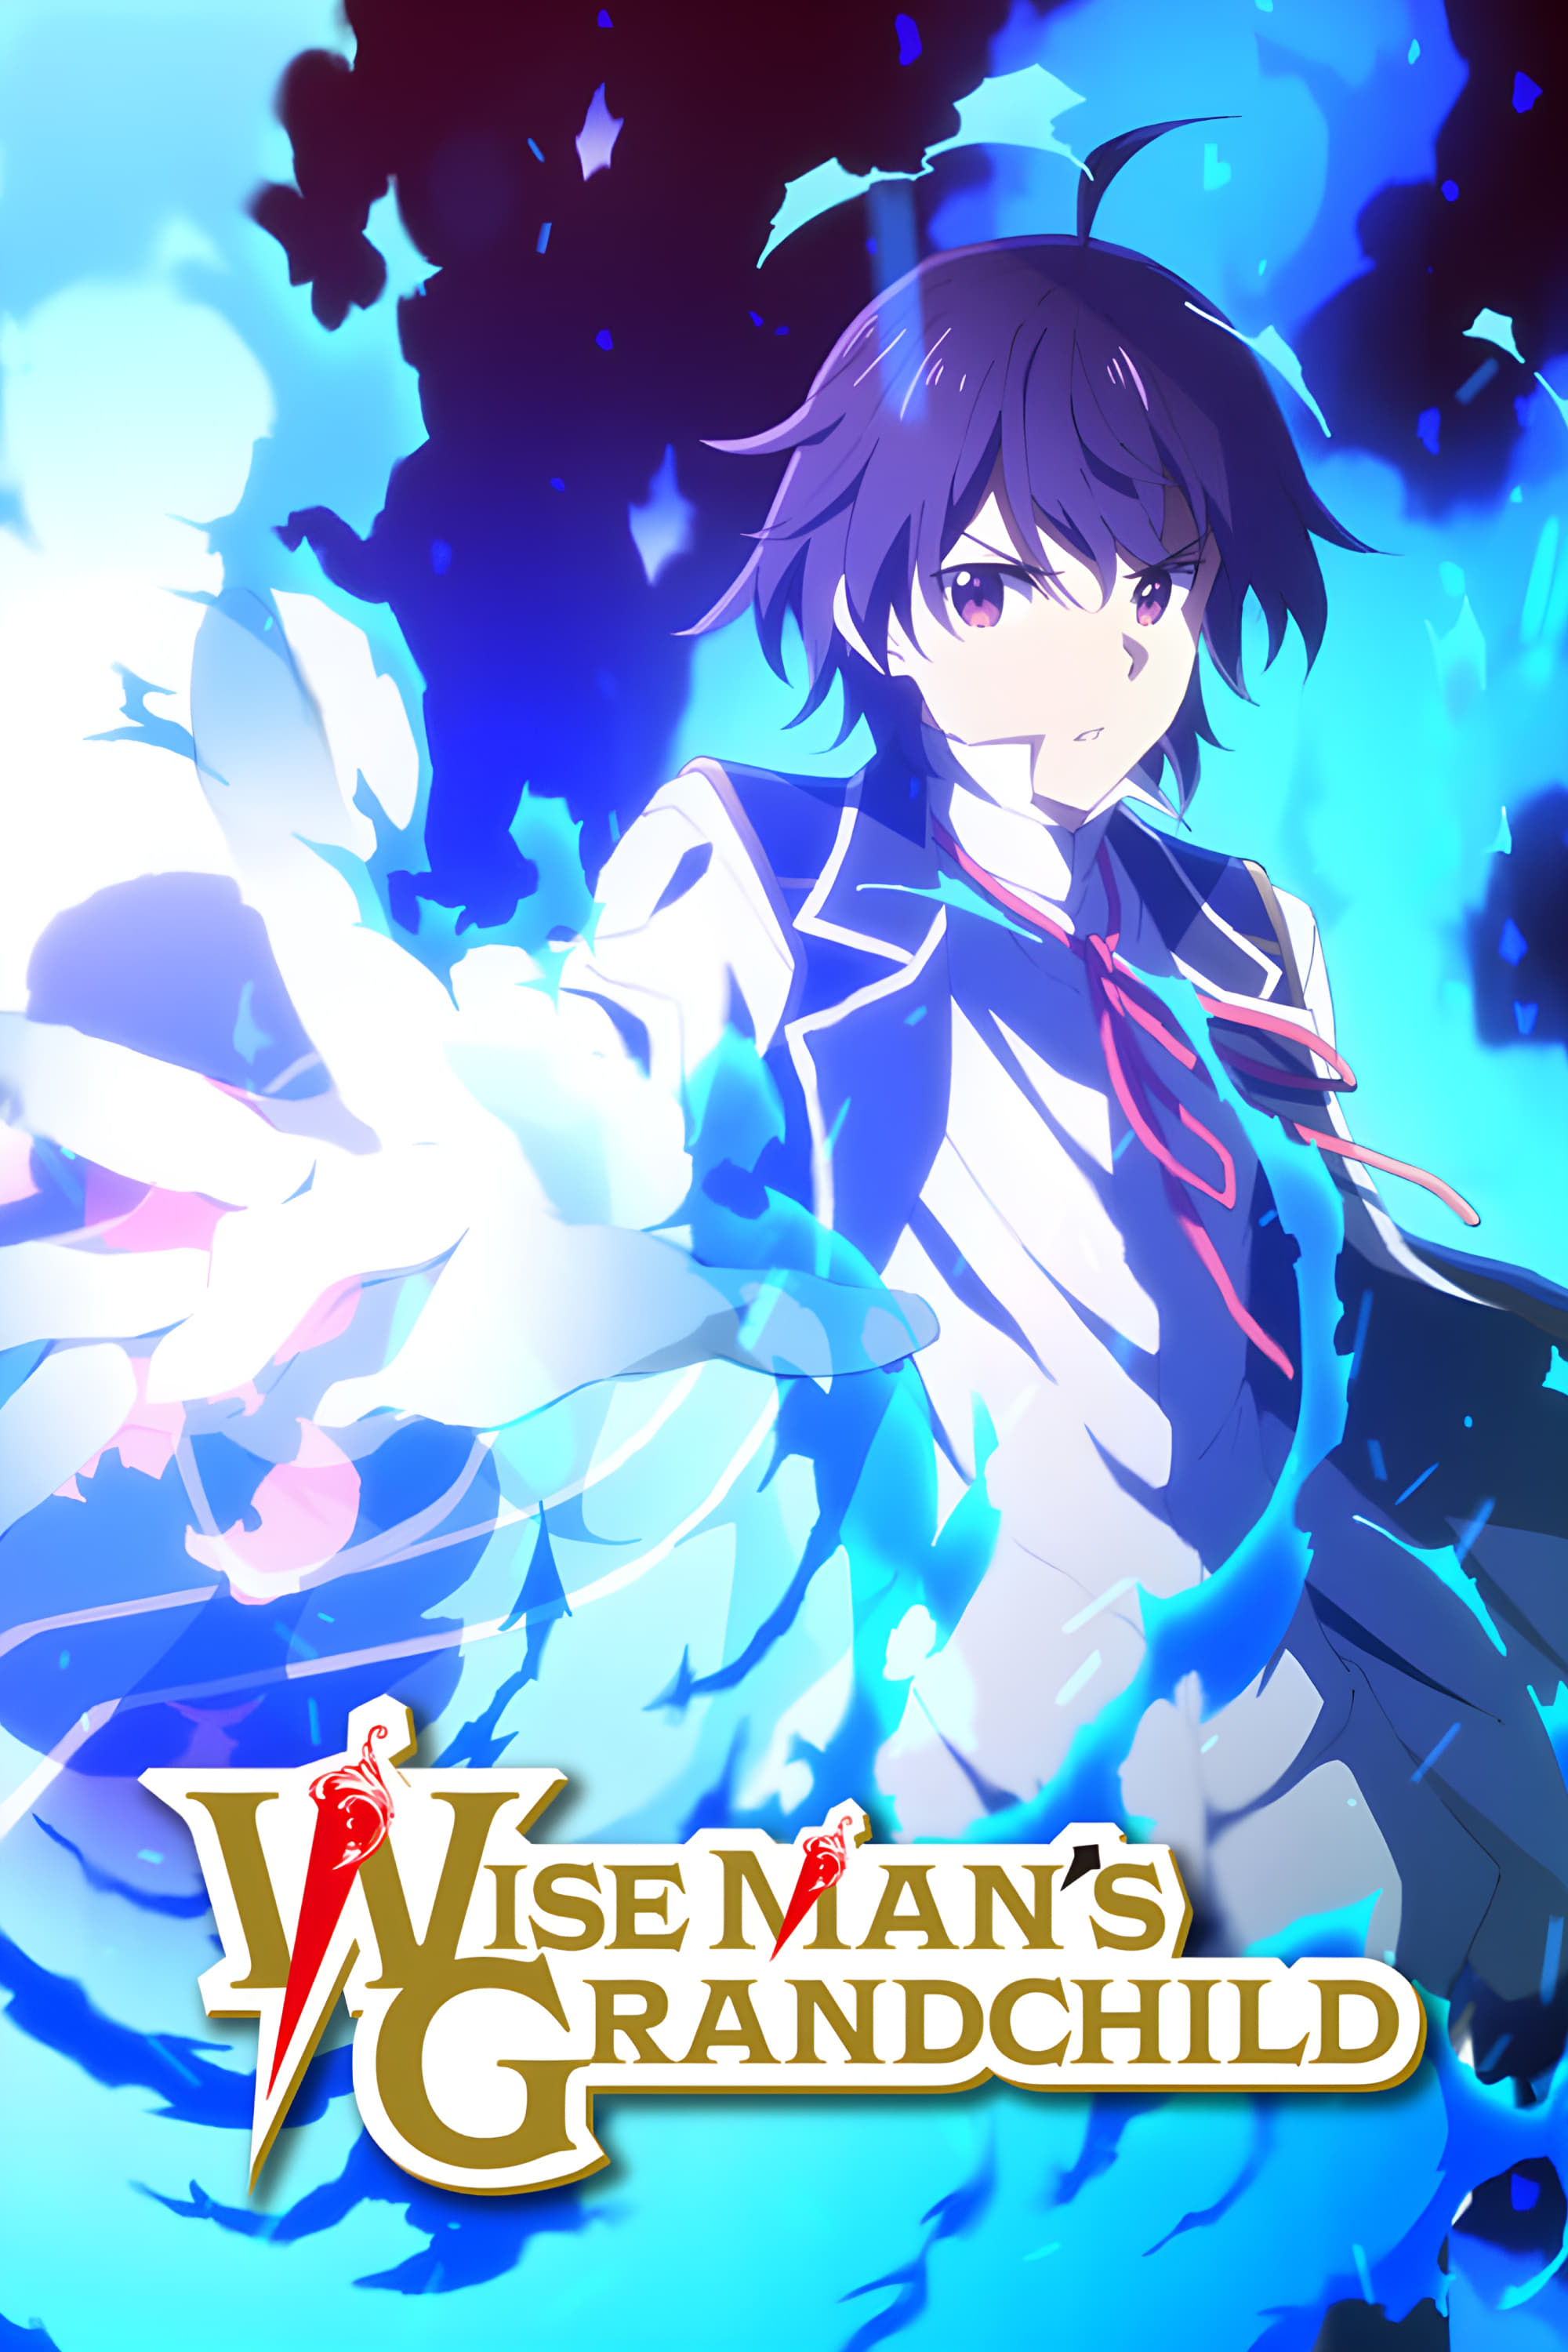 Wise Man's Grandchild, Anime Voice-Over Wiki